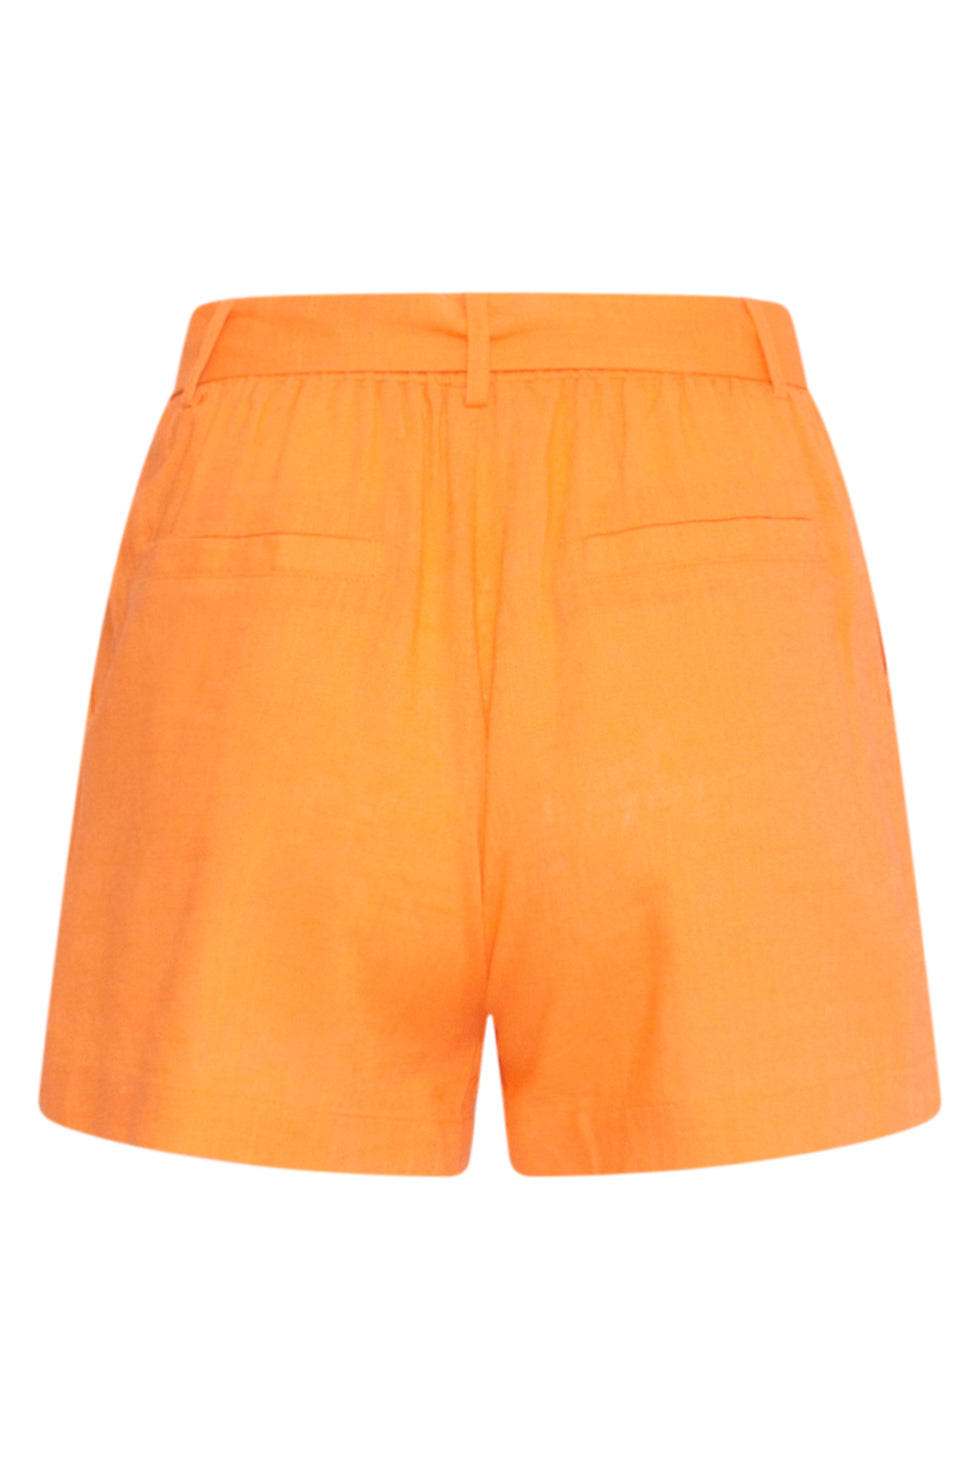 24346 Oranje Zomer Shorts